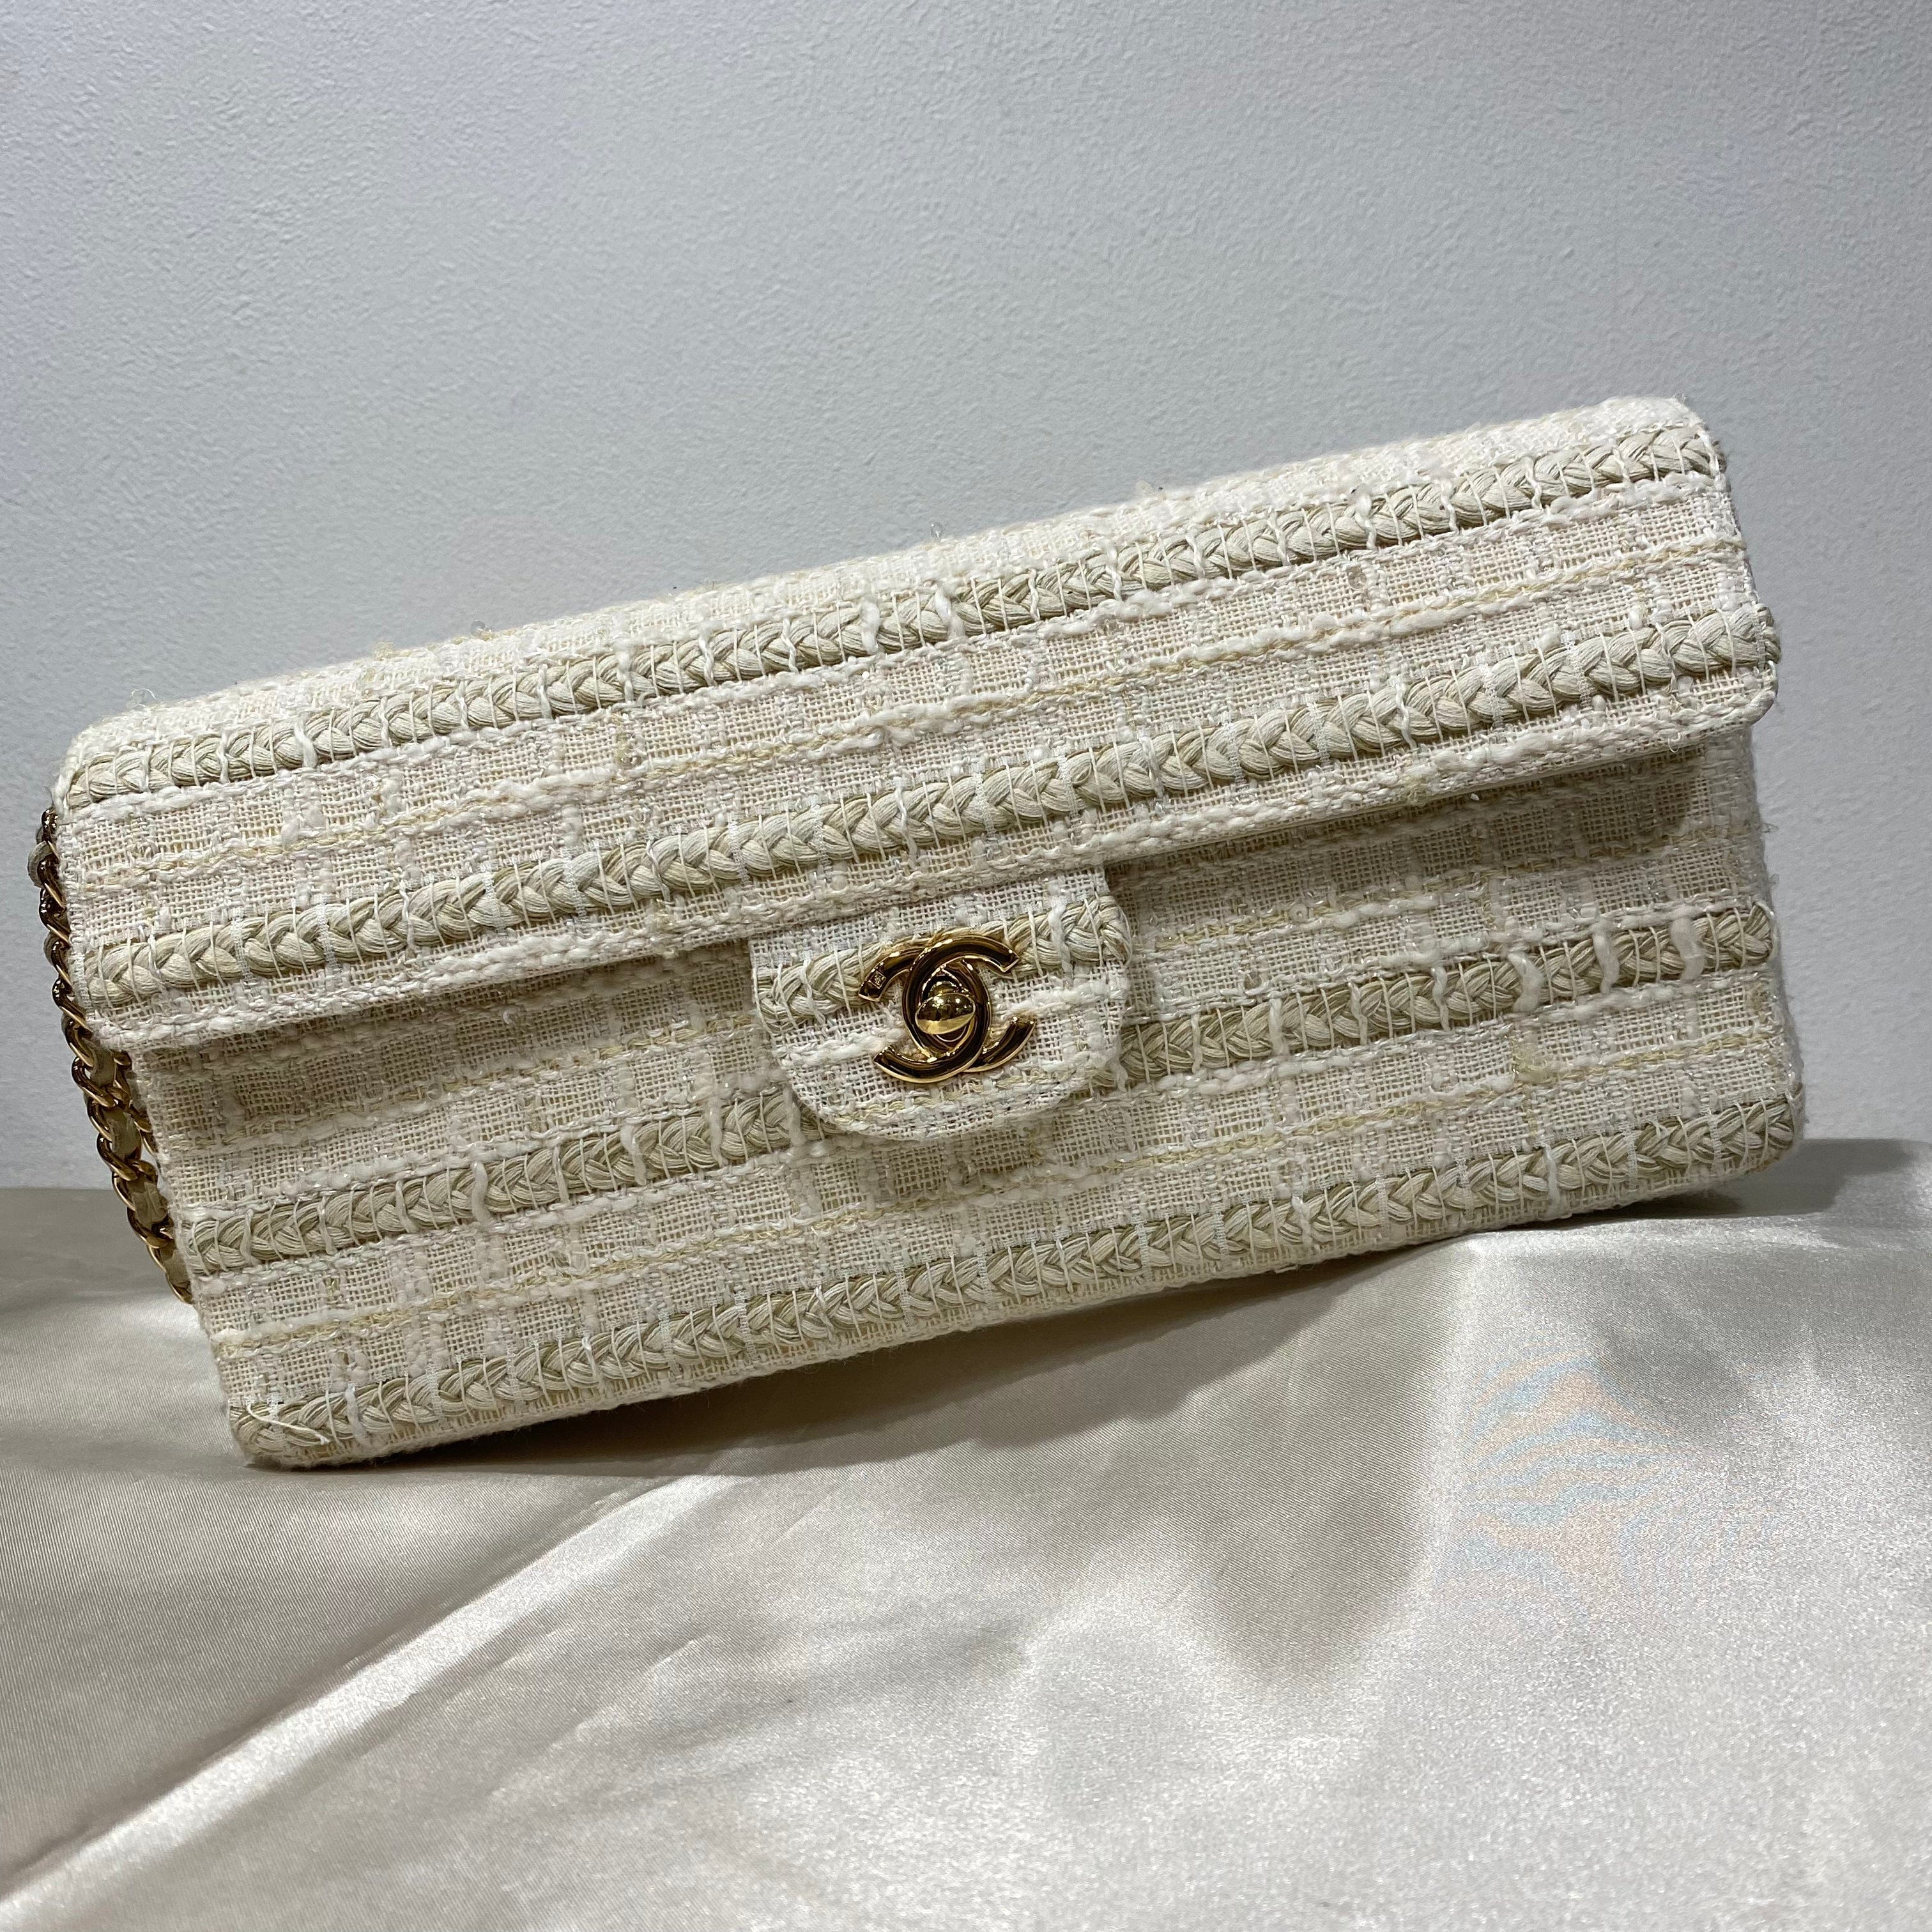 Chanel CHANEL VINTAGE CHAIN SHOULDER BAG WHITE TWEED 90198705